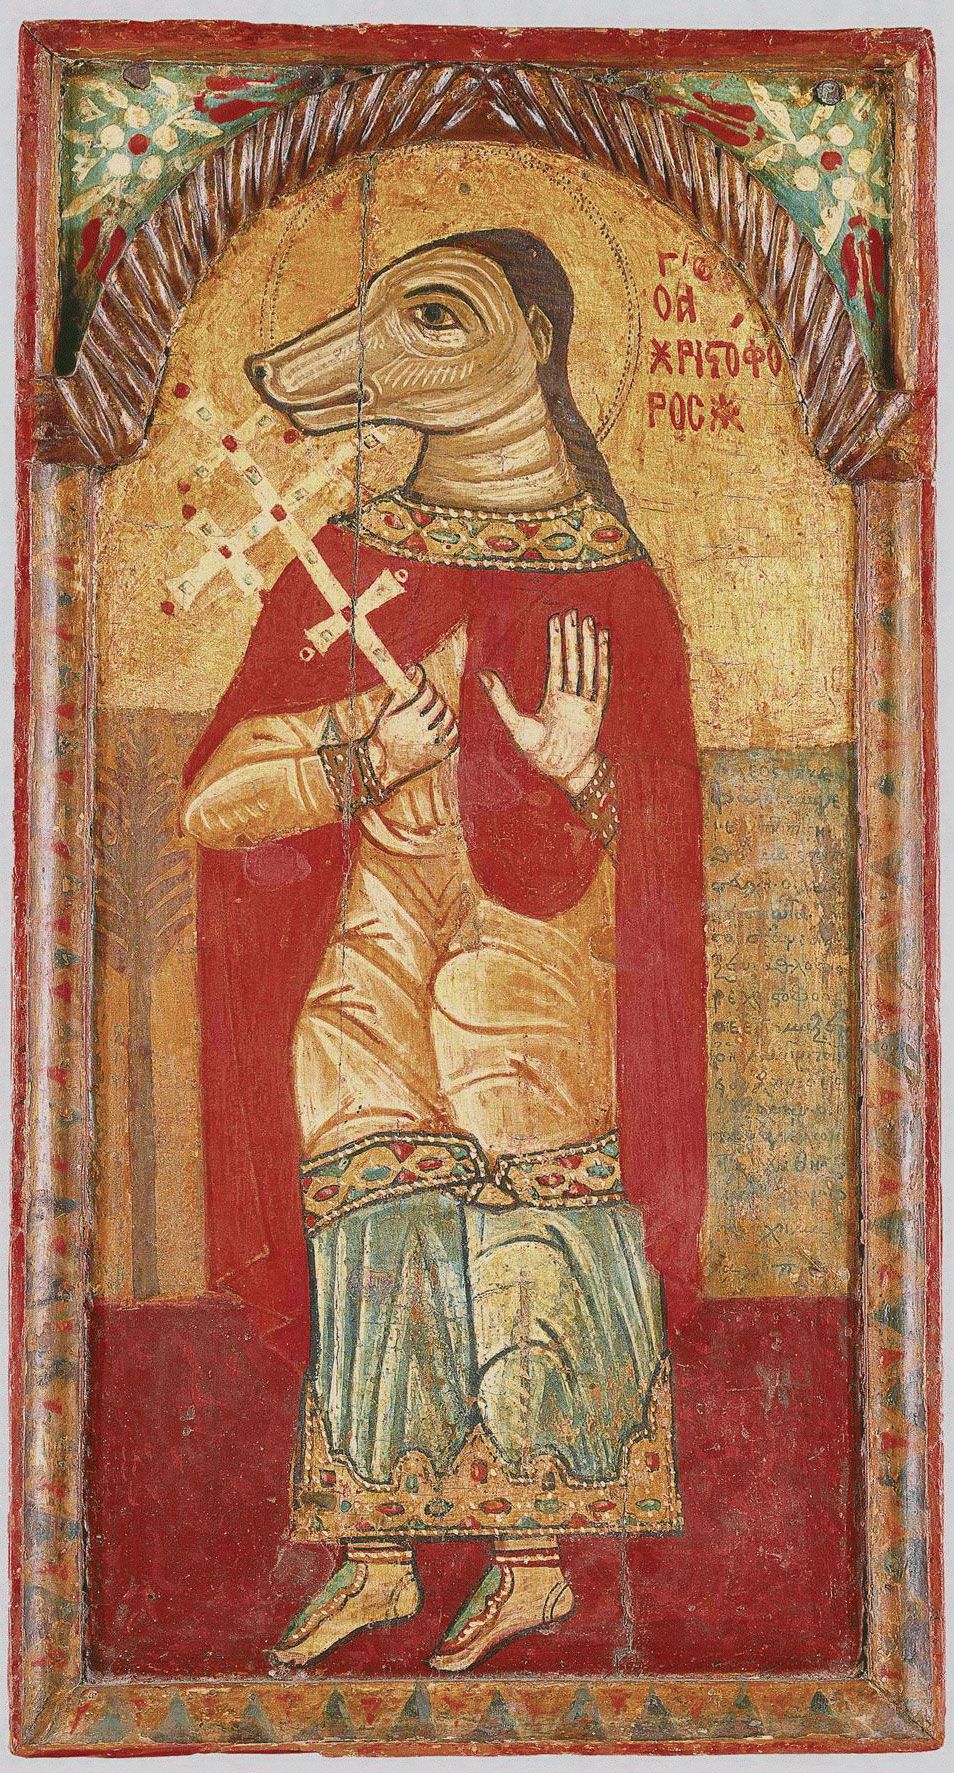 A dog-headed Saint Christopher icon